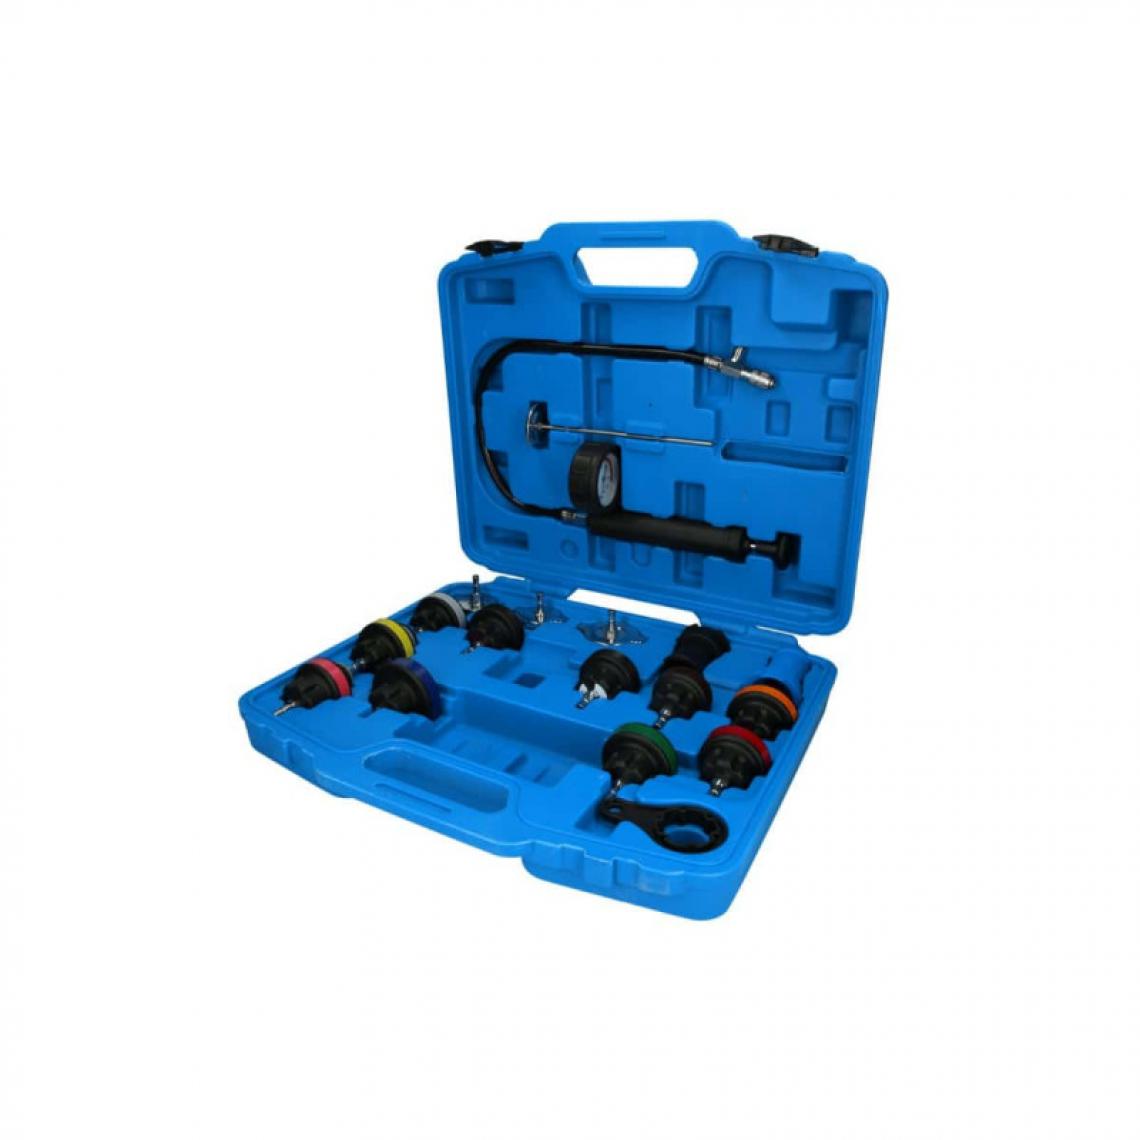 Brilliant Tools - Coffret diagnostic système de refroidissement BRILLIANT TOOLS - 18pcs - BT521200 - Boîtes à outils